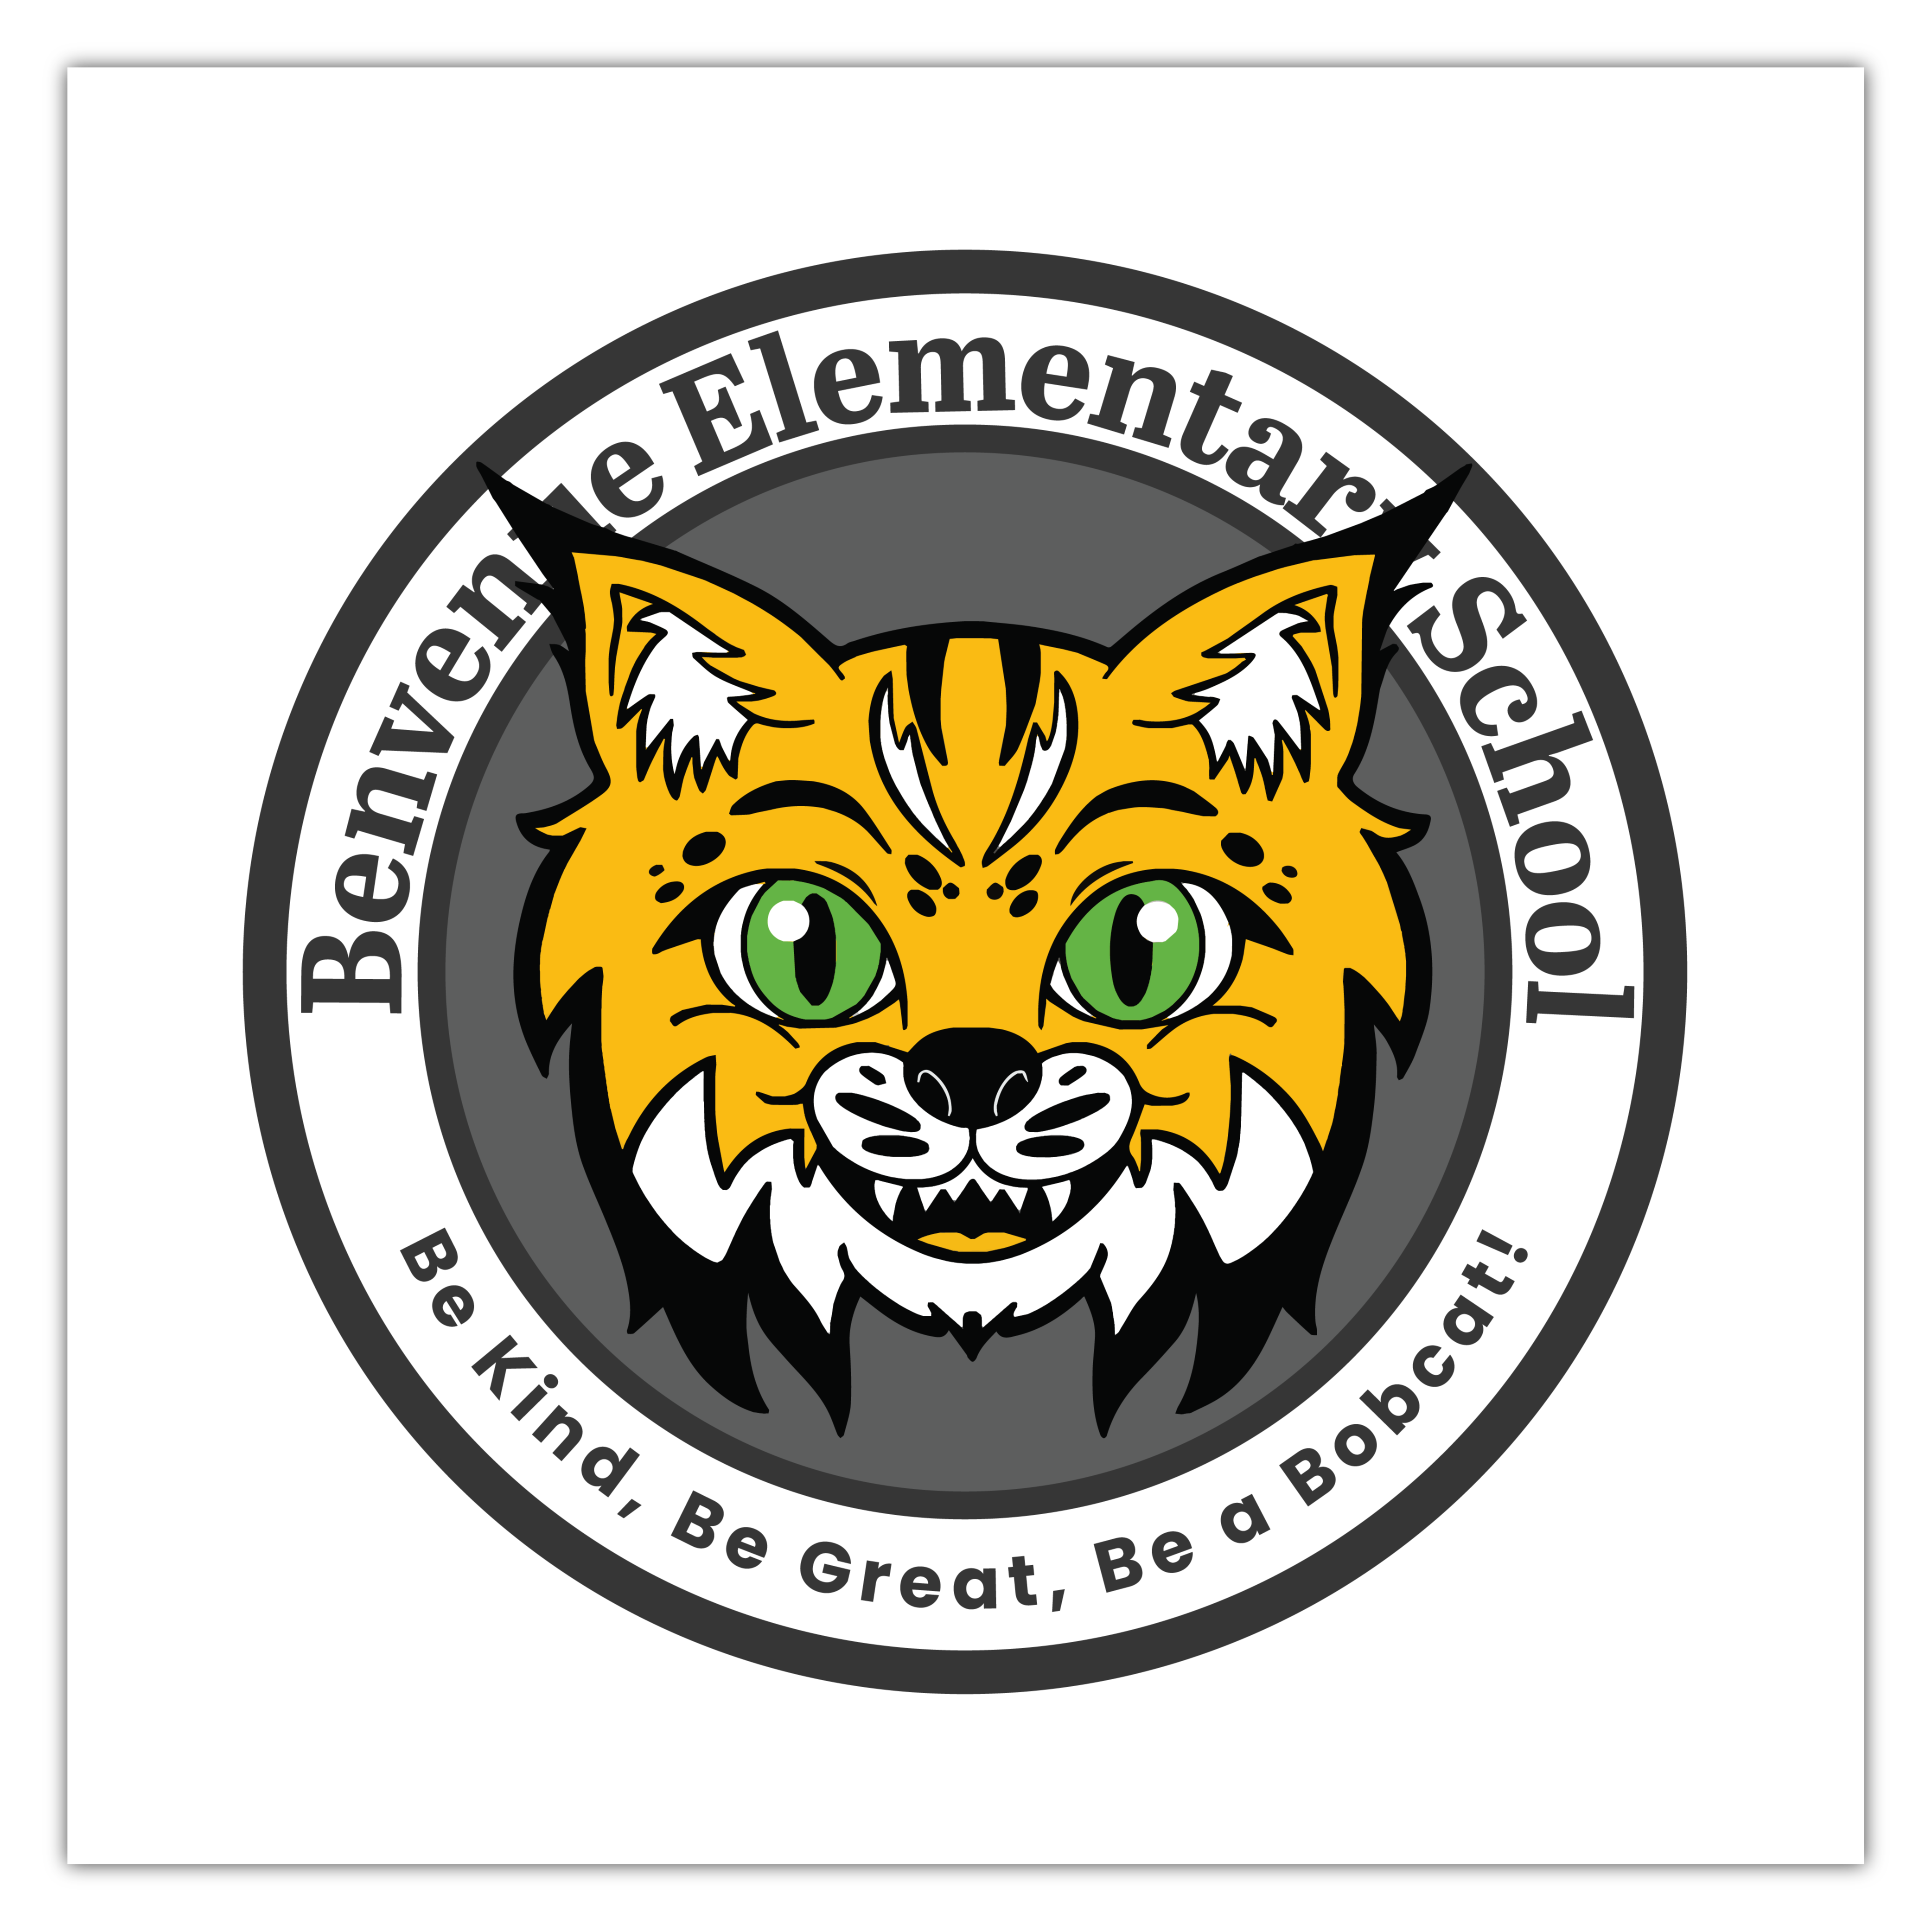 Bevnuene Elementary logo